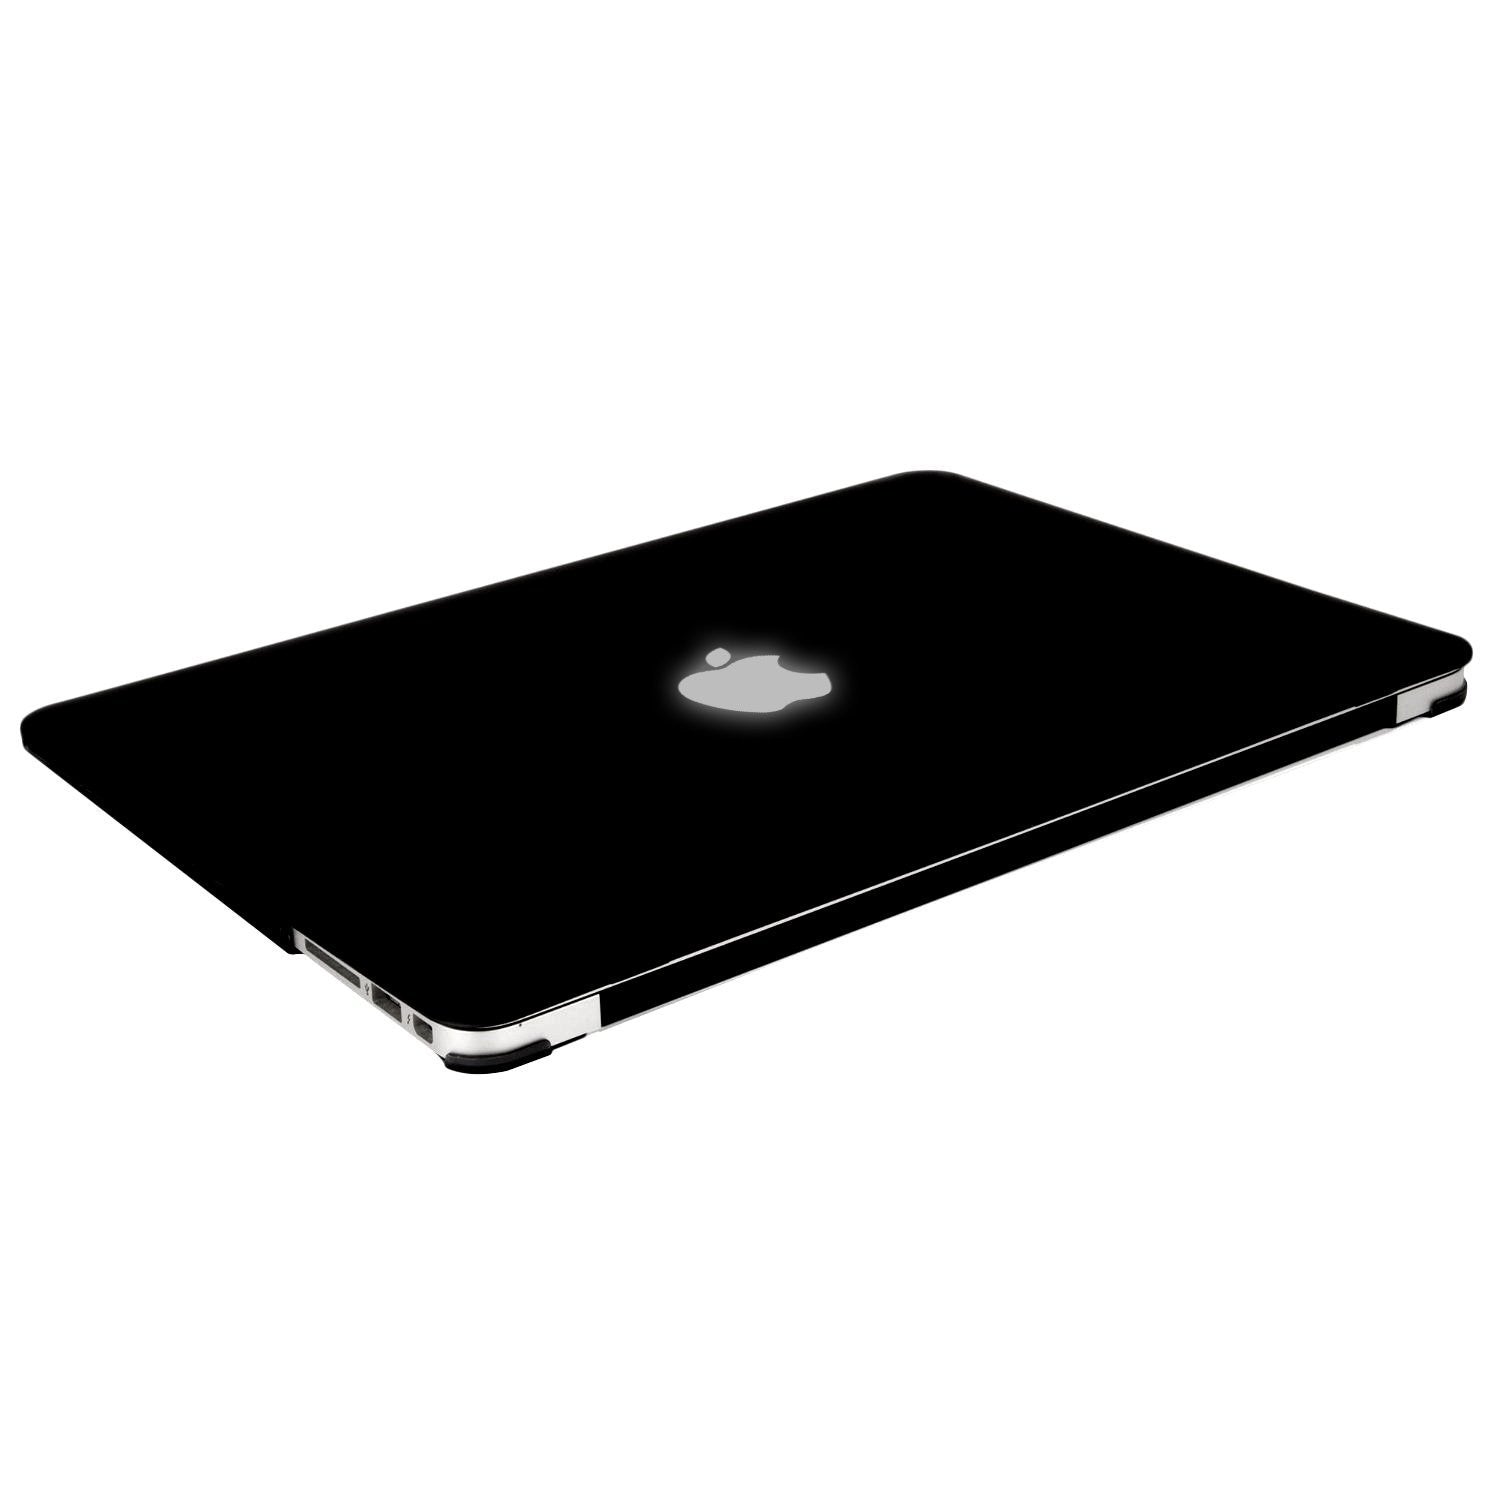 Macbook High Quality Plastic Hard Case